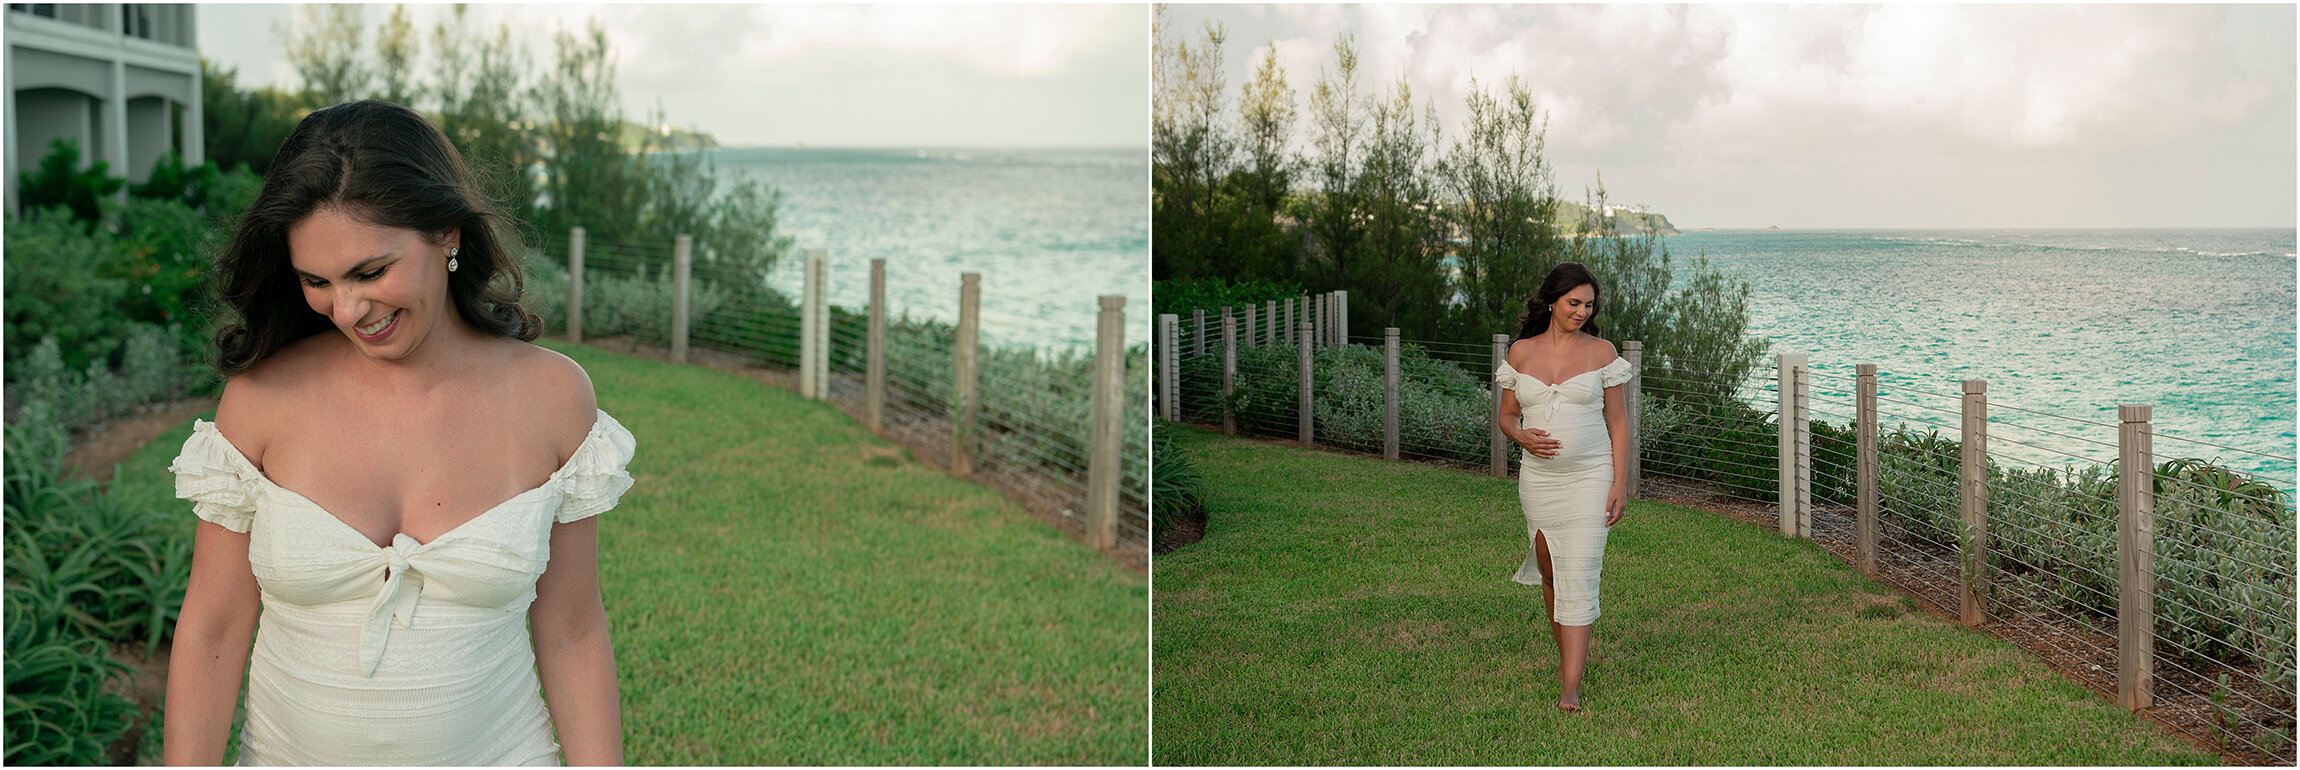 Bermuda Babymoon_The Loren_©FianderFoto_007.jpg